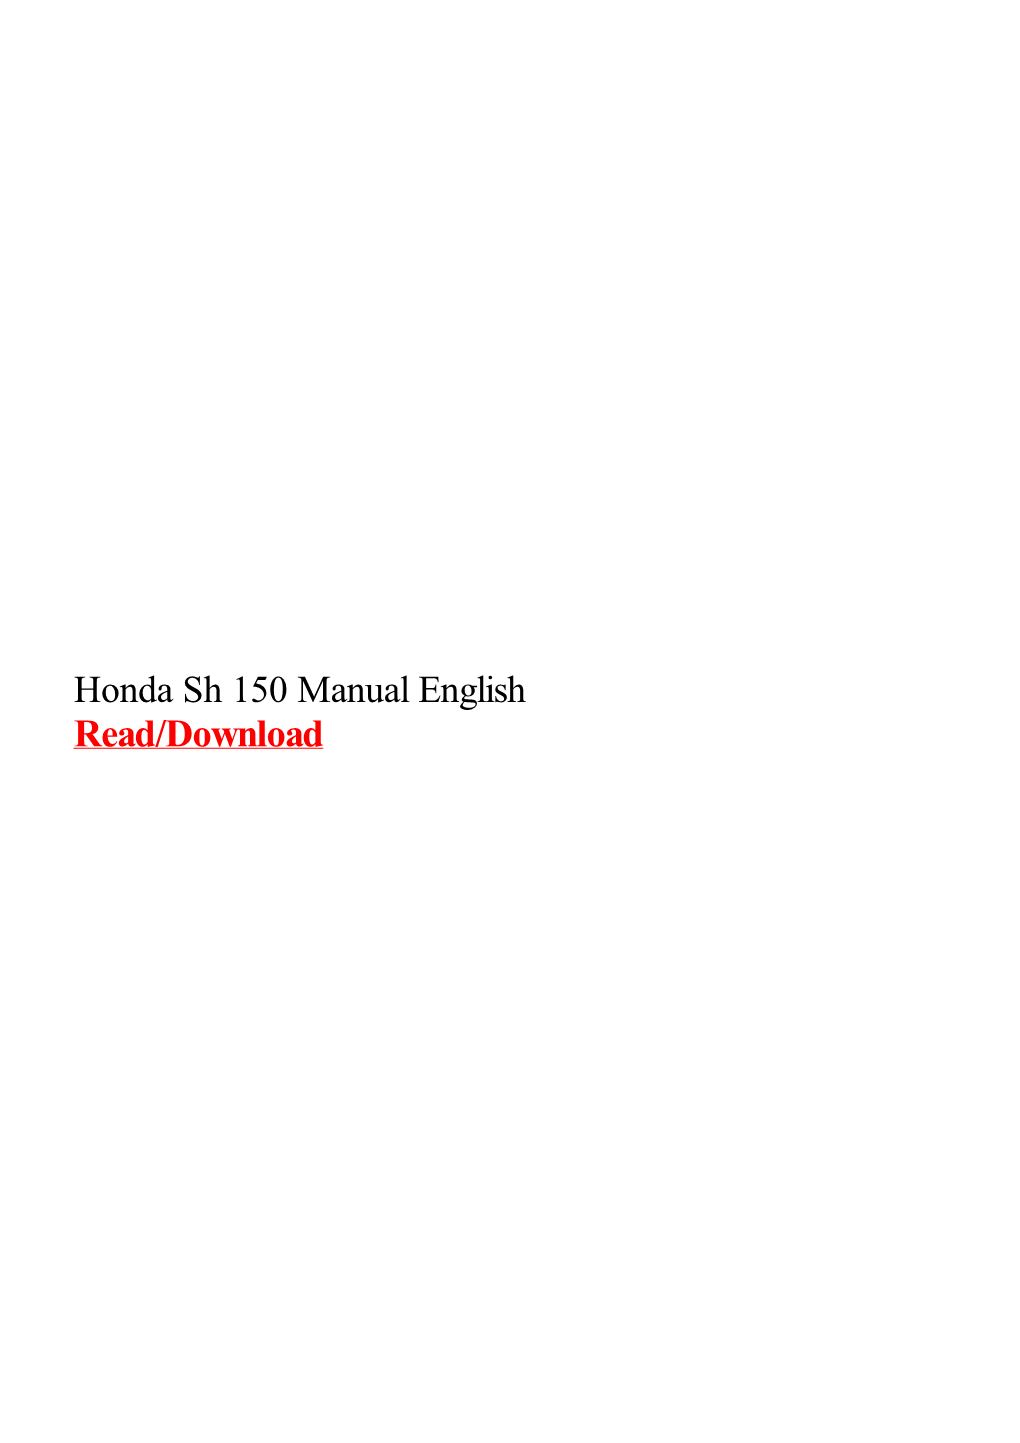 Honda Sh 150 Manual English Download Honda Sh 125 Manual Pdf English Online Honda Sh Mode 125 2014 Haynes Workshop Manual for Honda SH125/150, Dylan